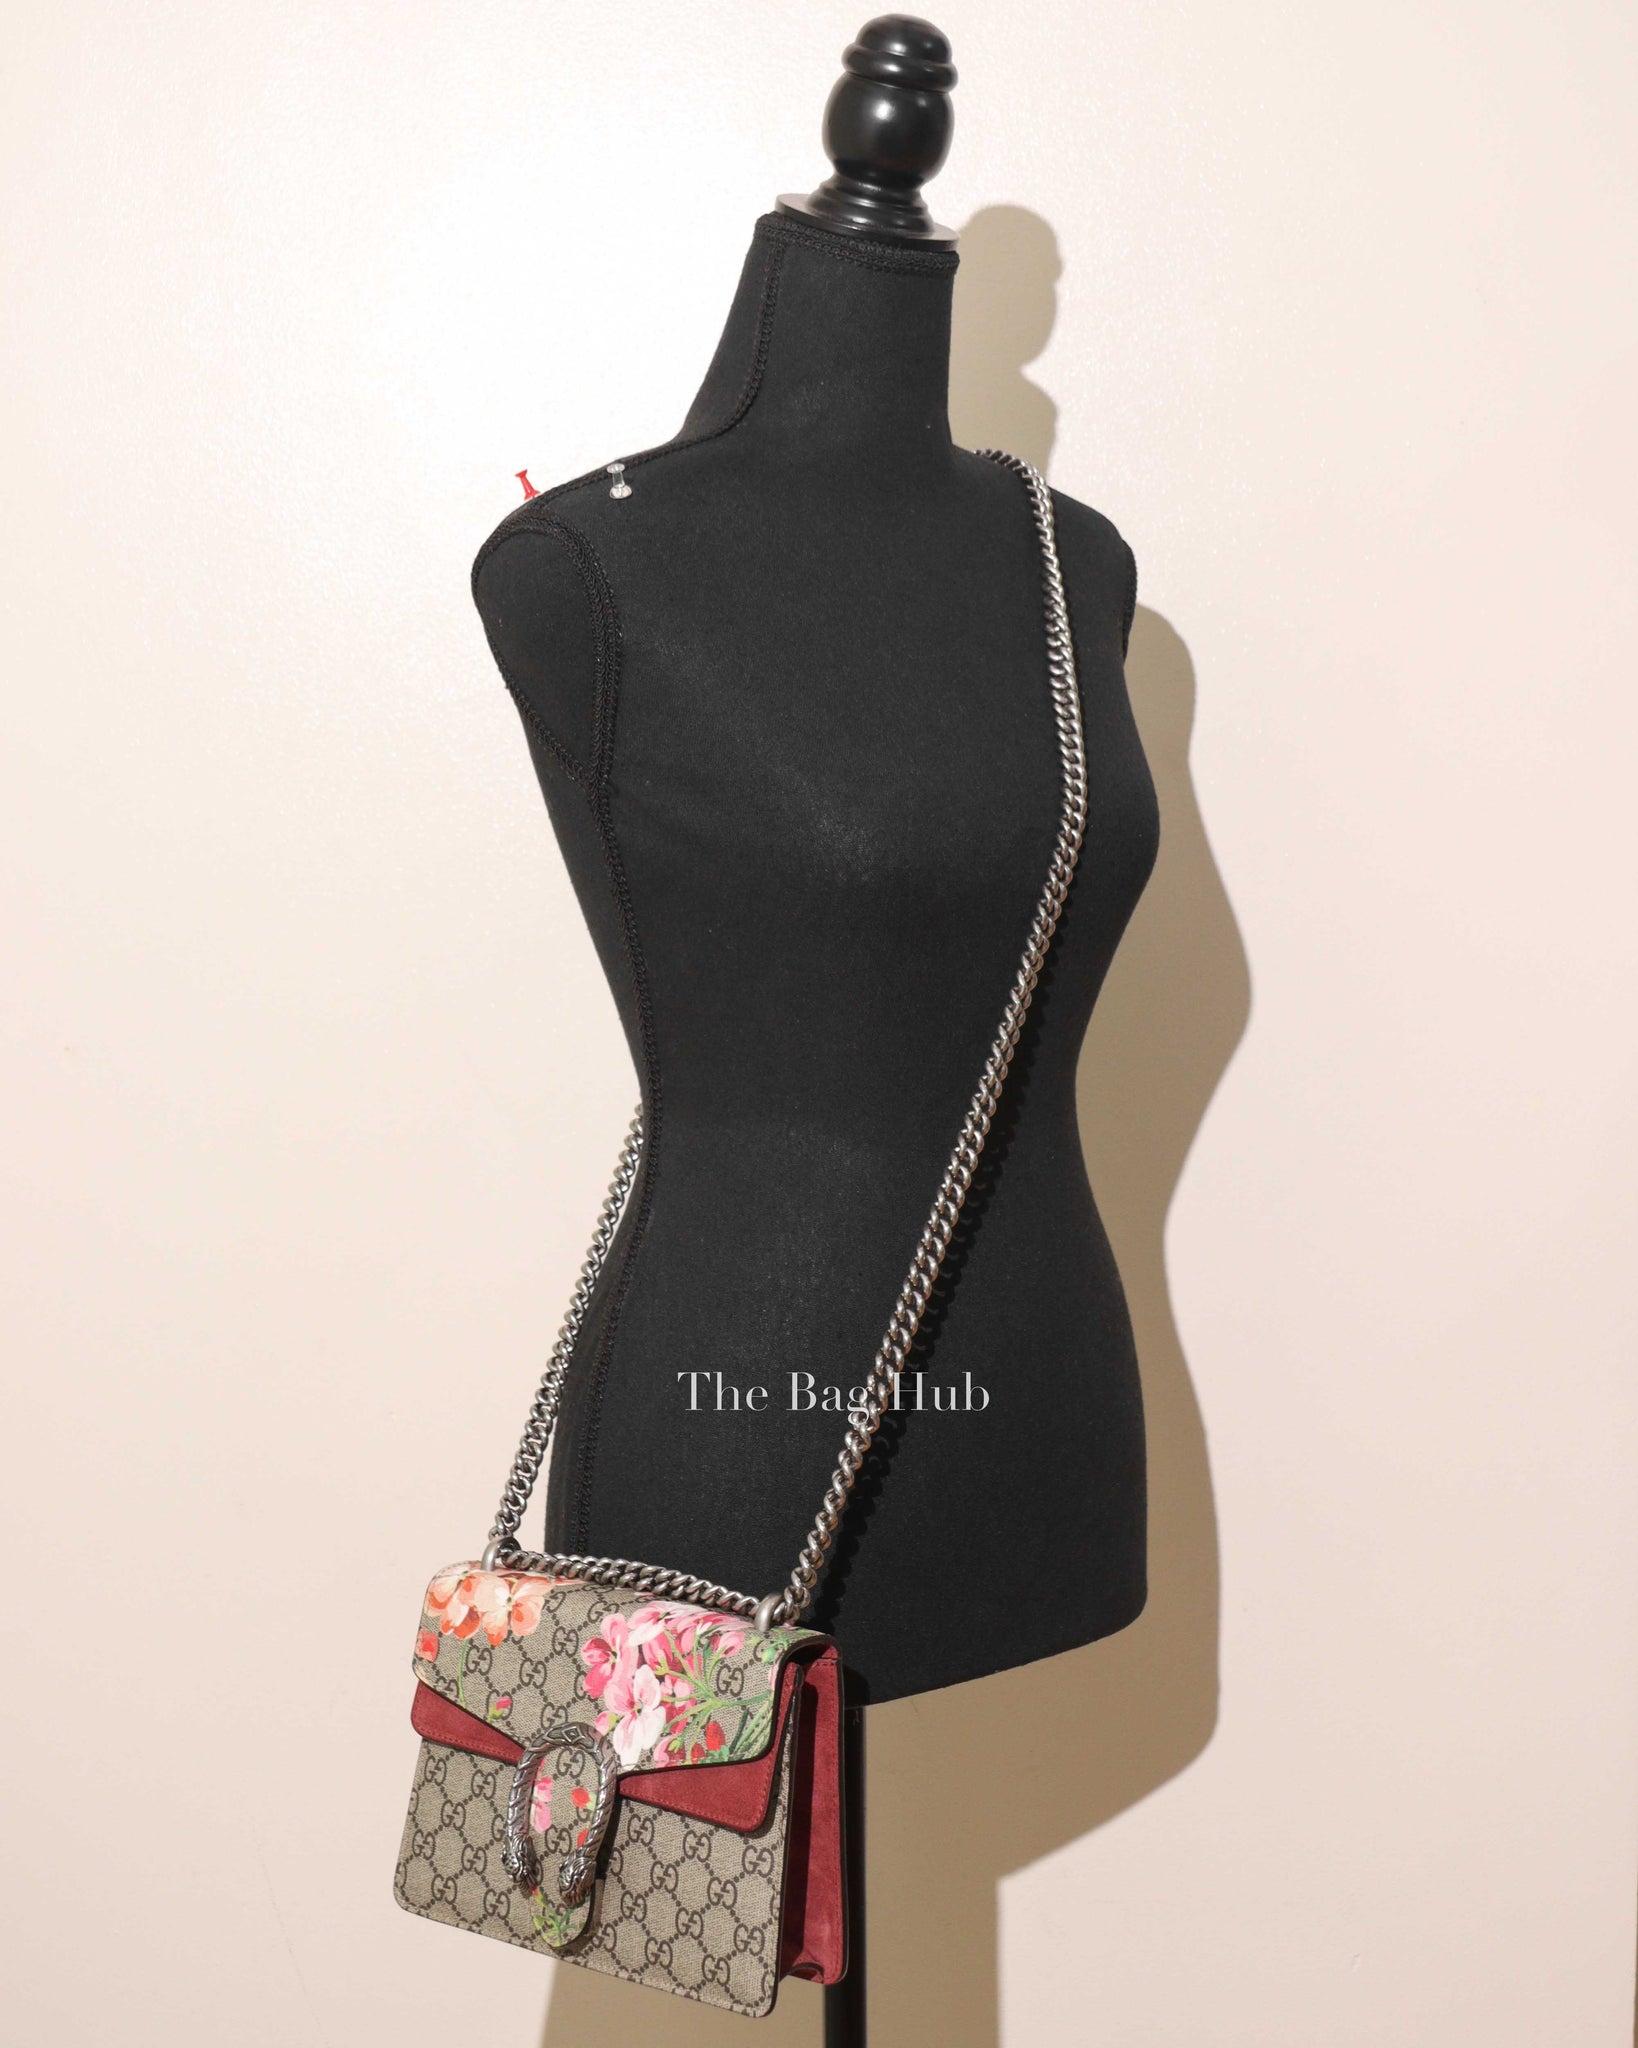 Gucci Floral Monogram GG Supreme Dionysus Shoulder Chain Bag